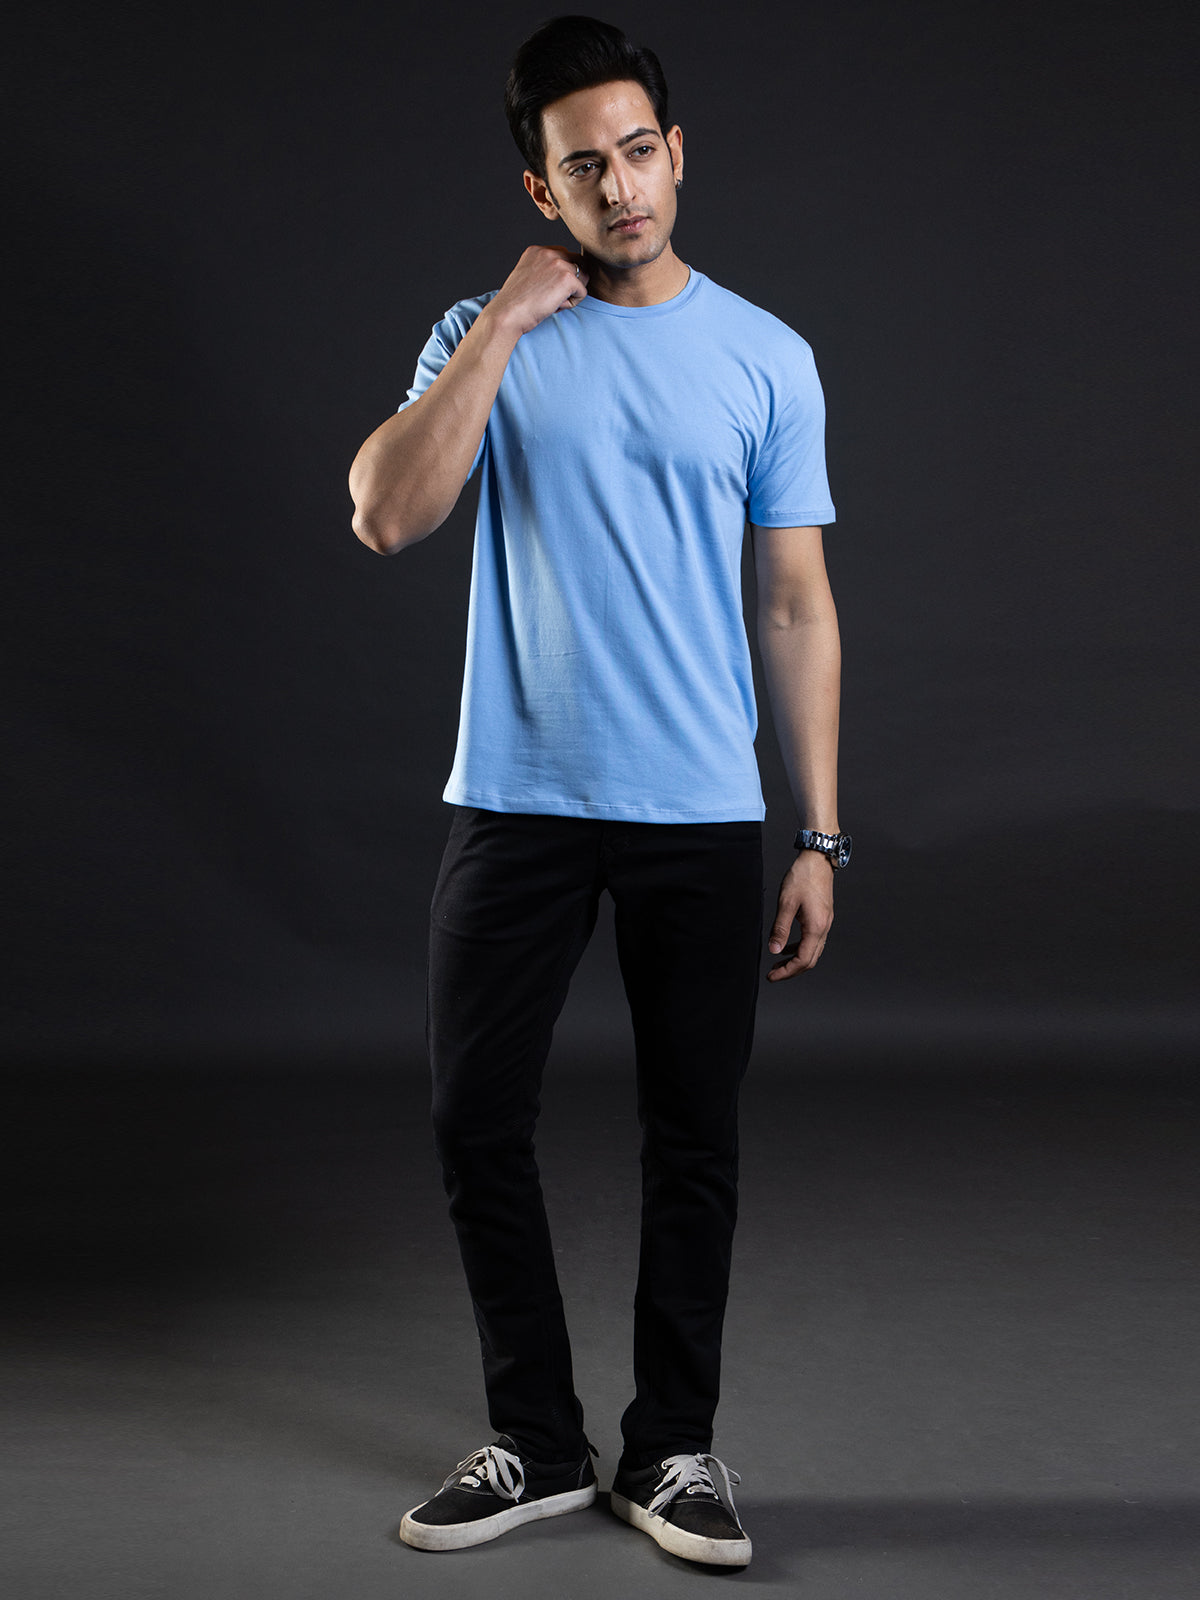 Maya Blue  | ACTION series | Sports t shirt for Men